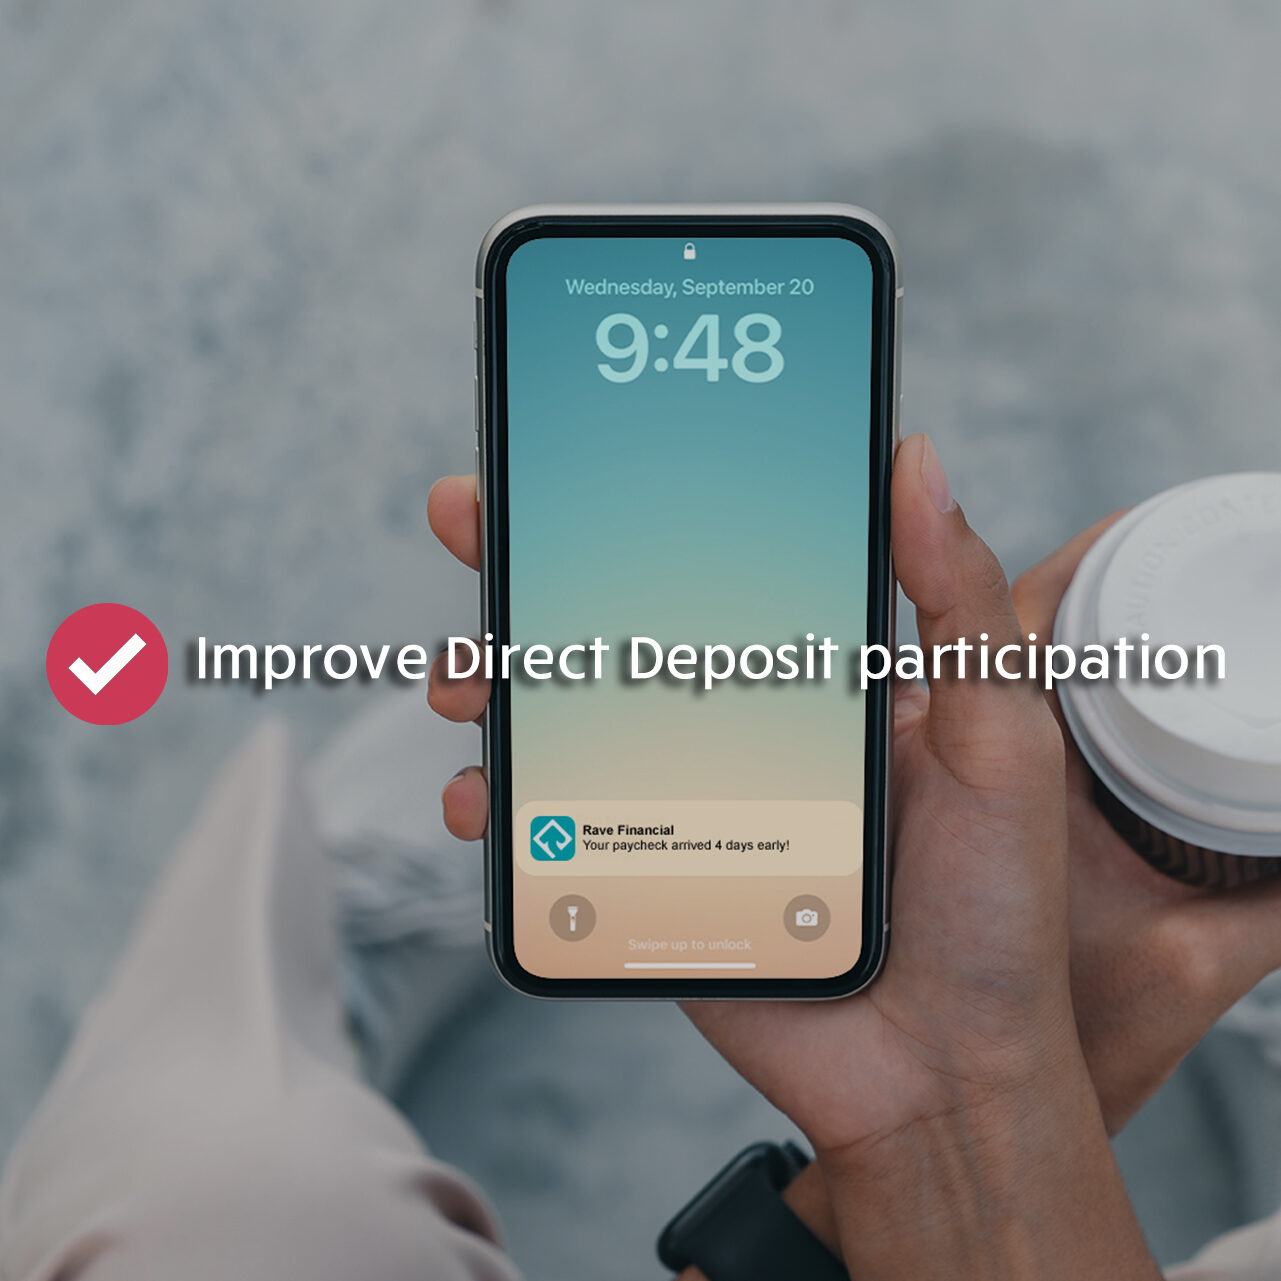 header stating "improve direct deposit participation"